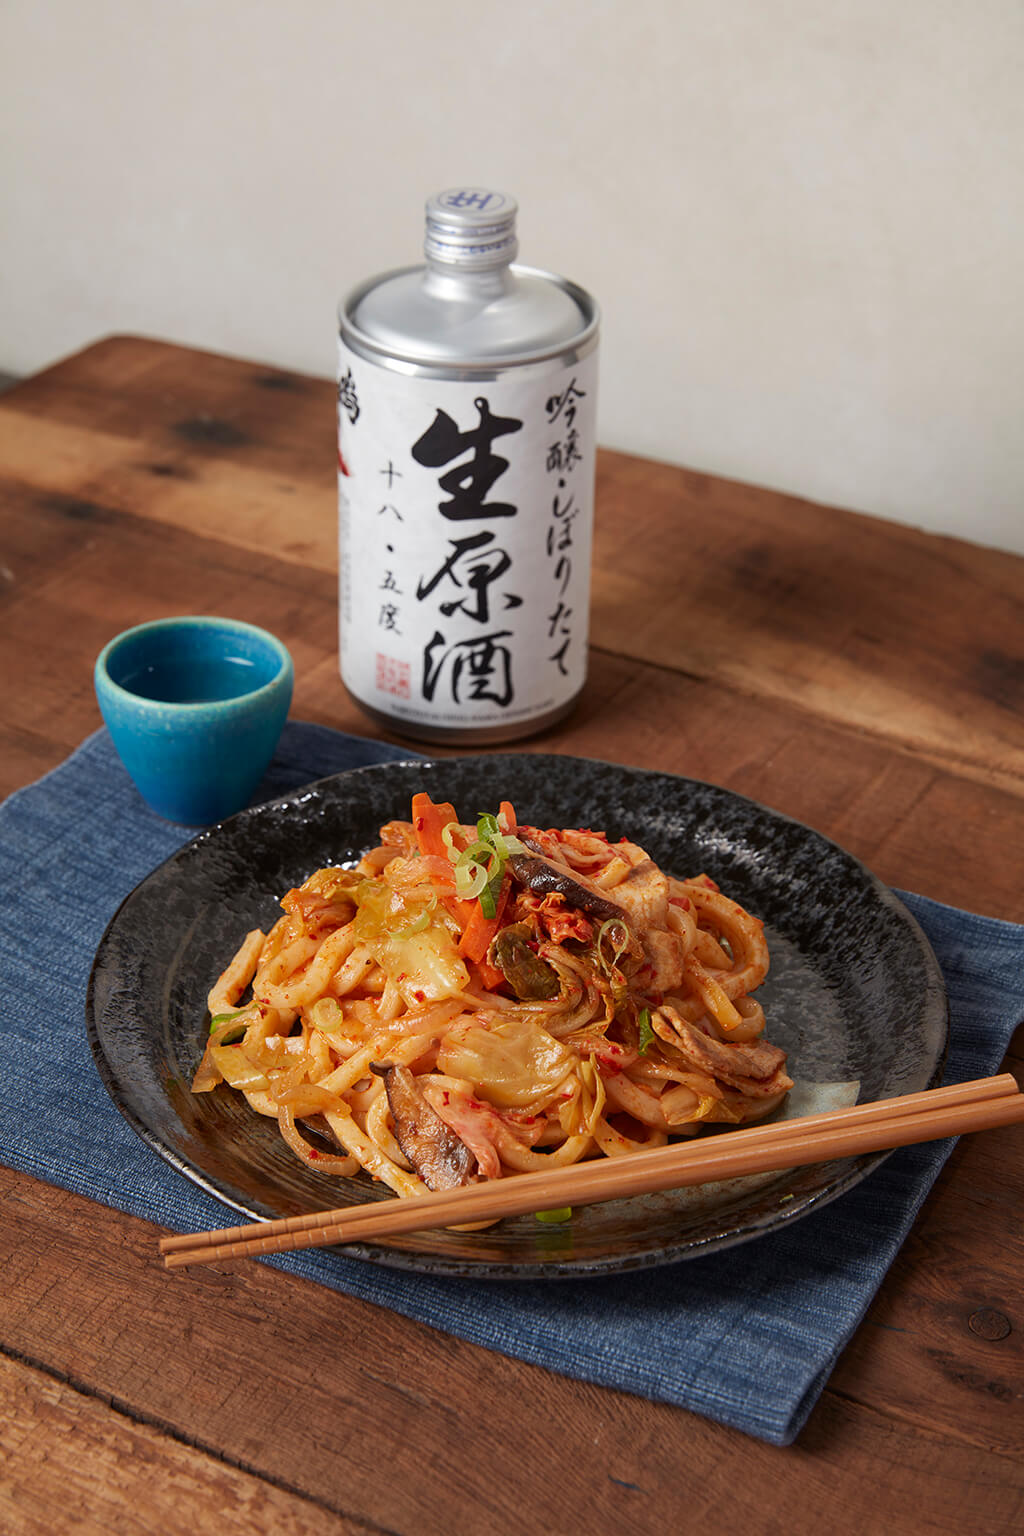 Narutotai “Ginjo” Nama Genshu, with a kimchi yaki udon